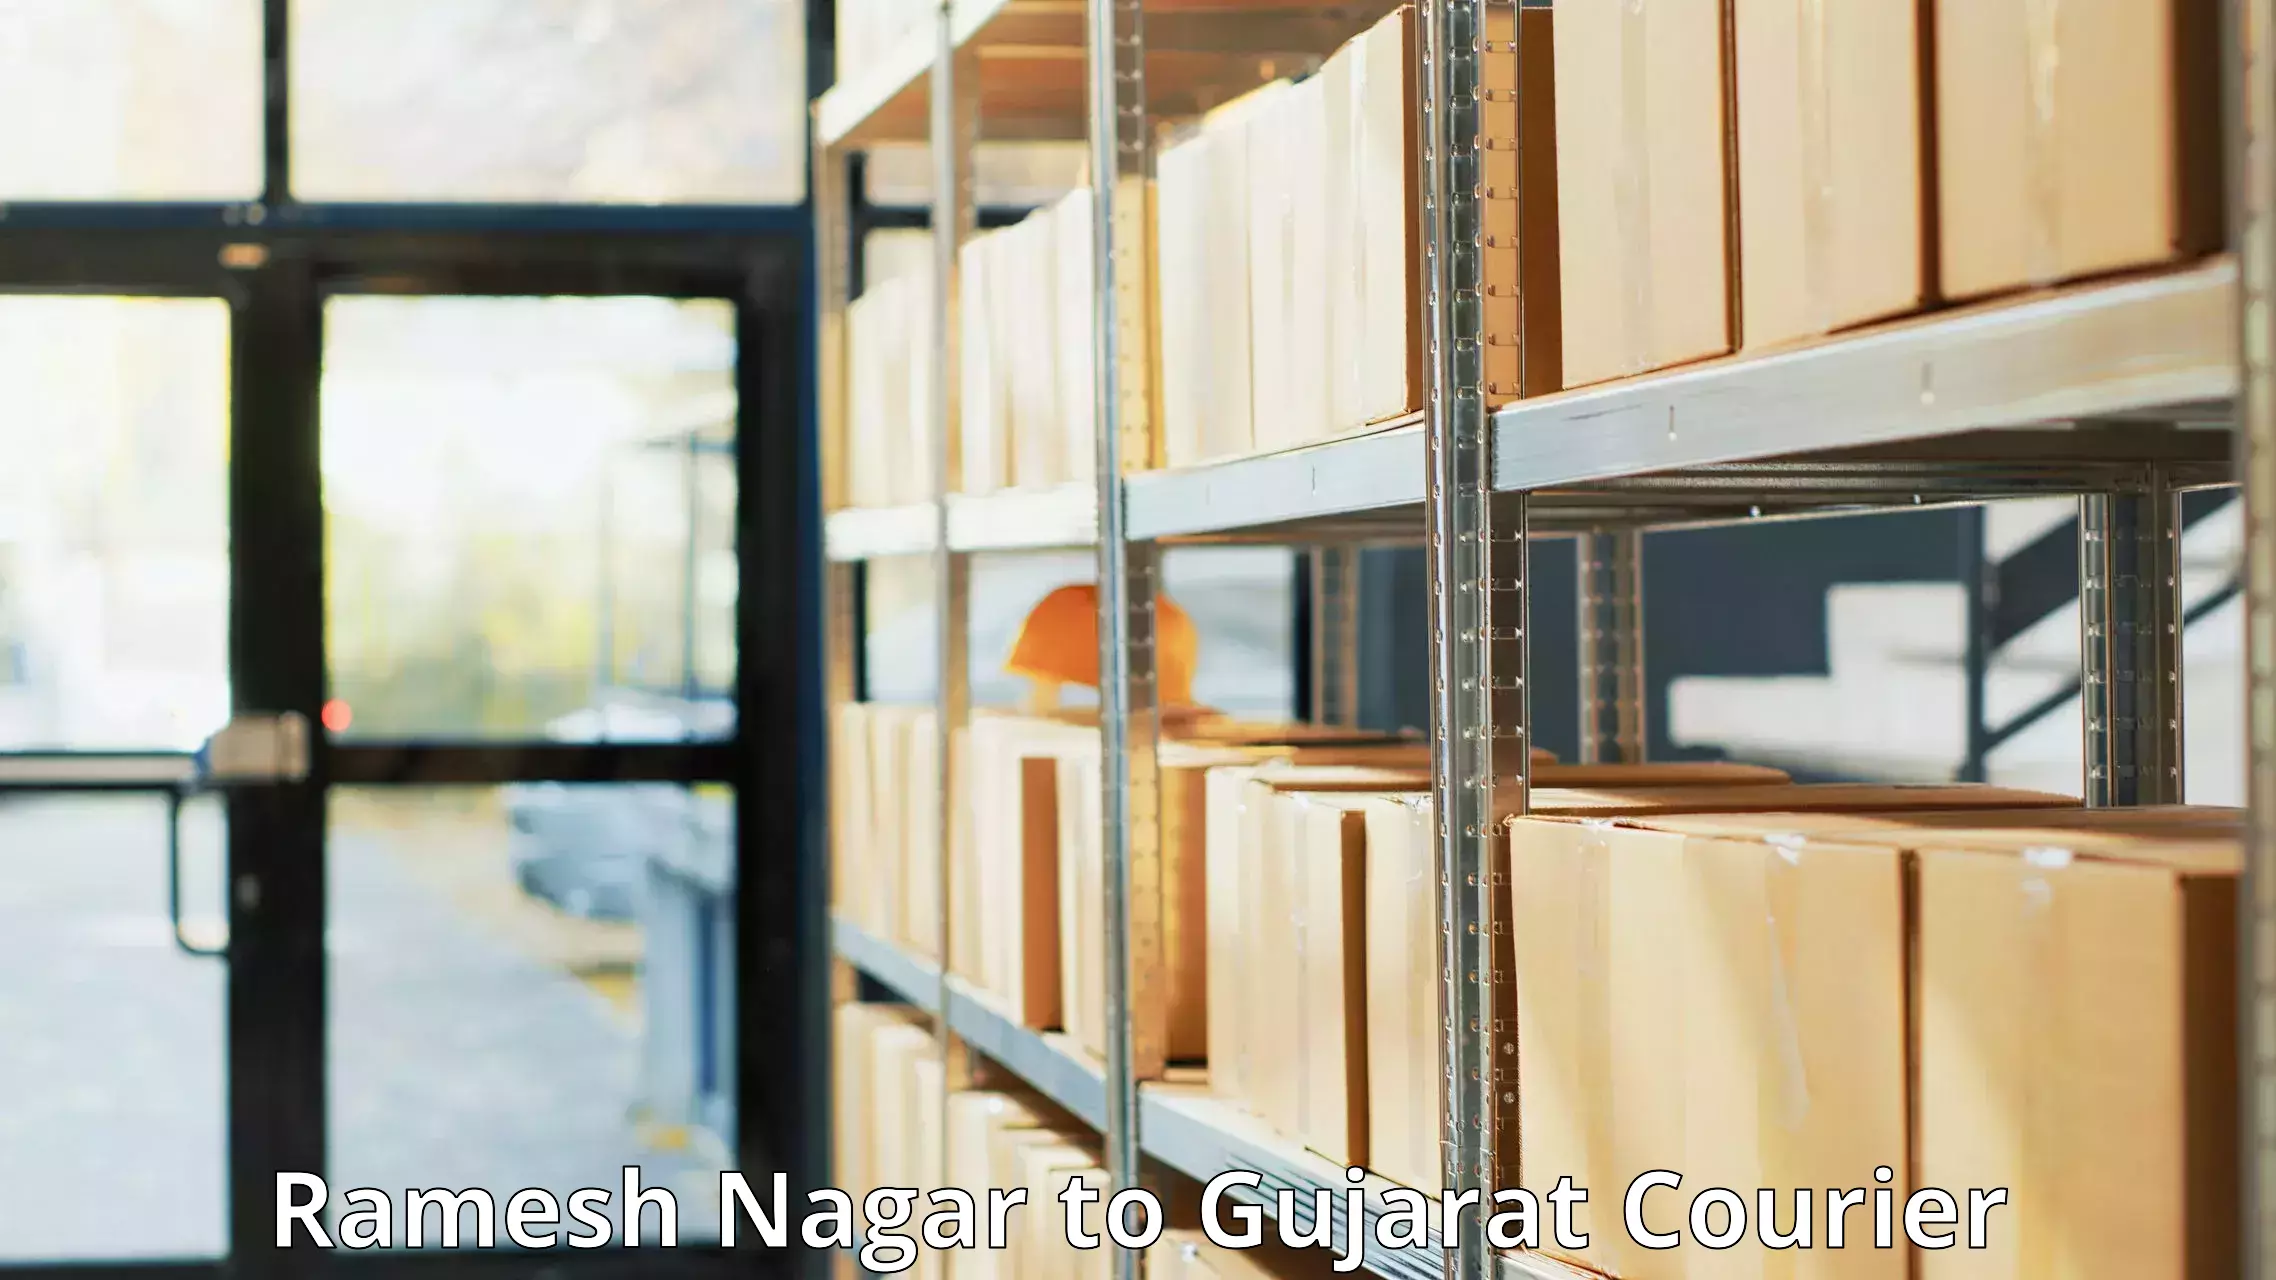 International courier networks Ramesh Nagar to GIDC